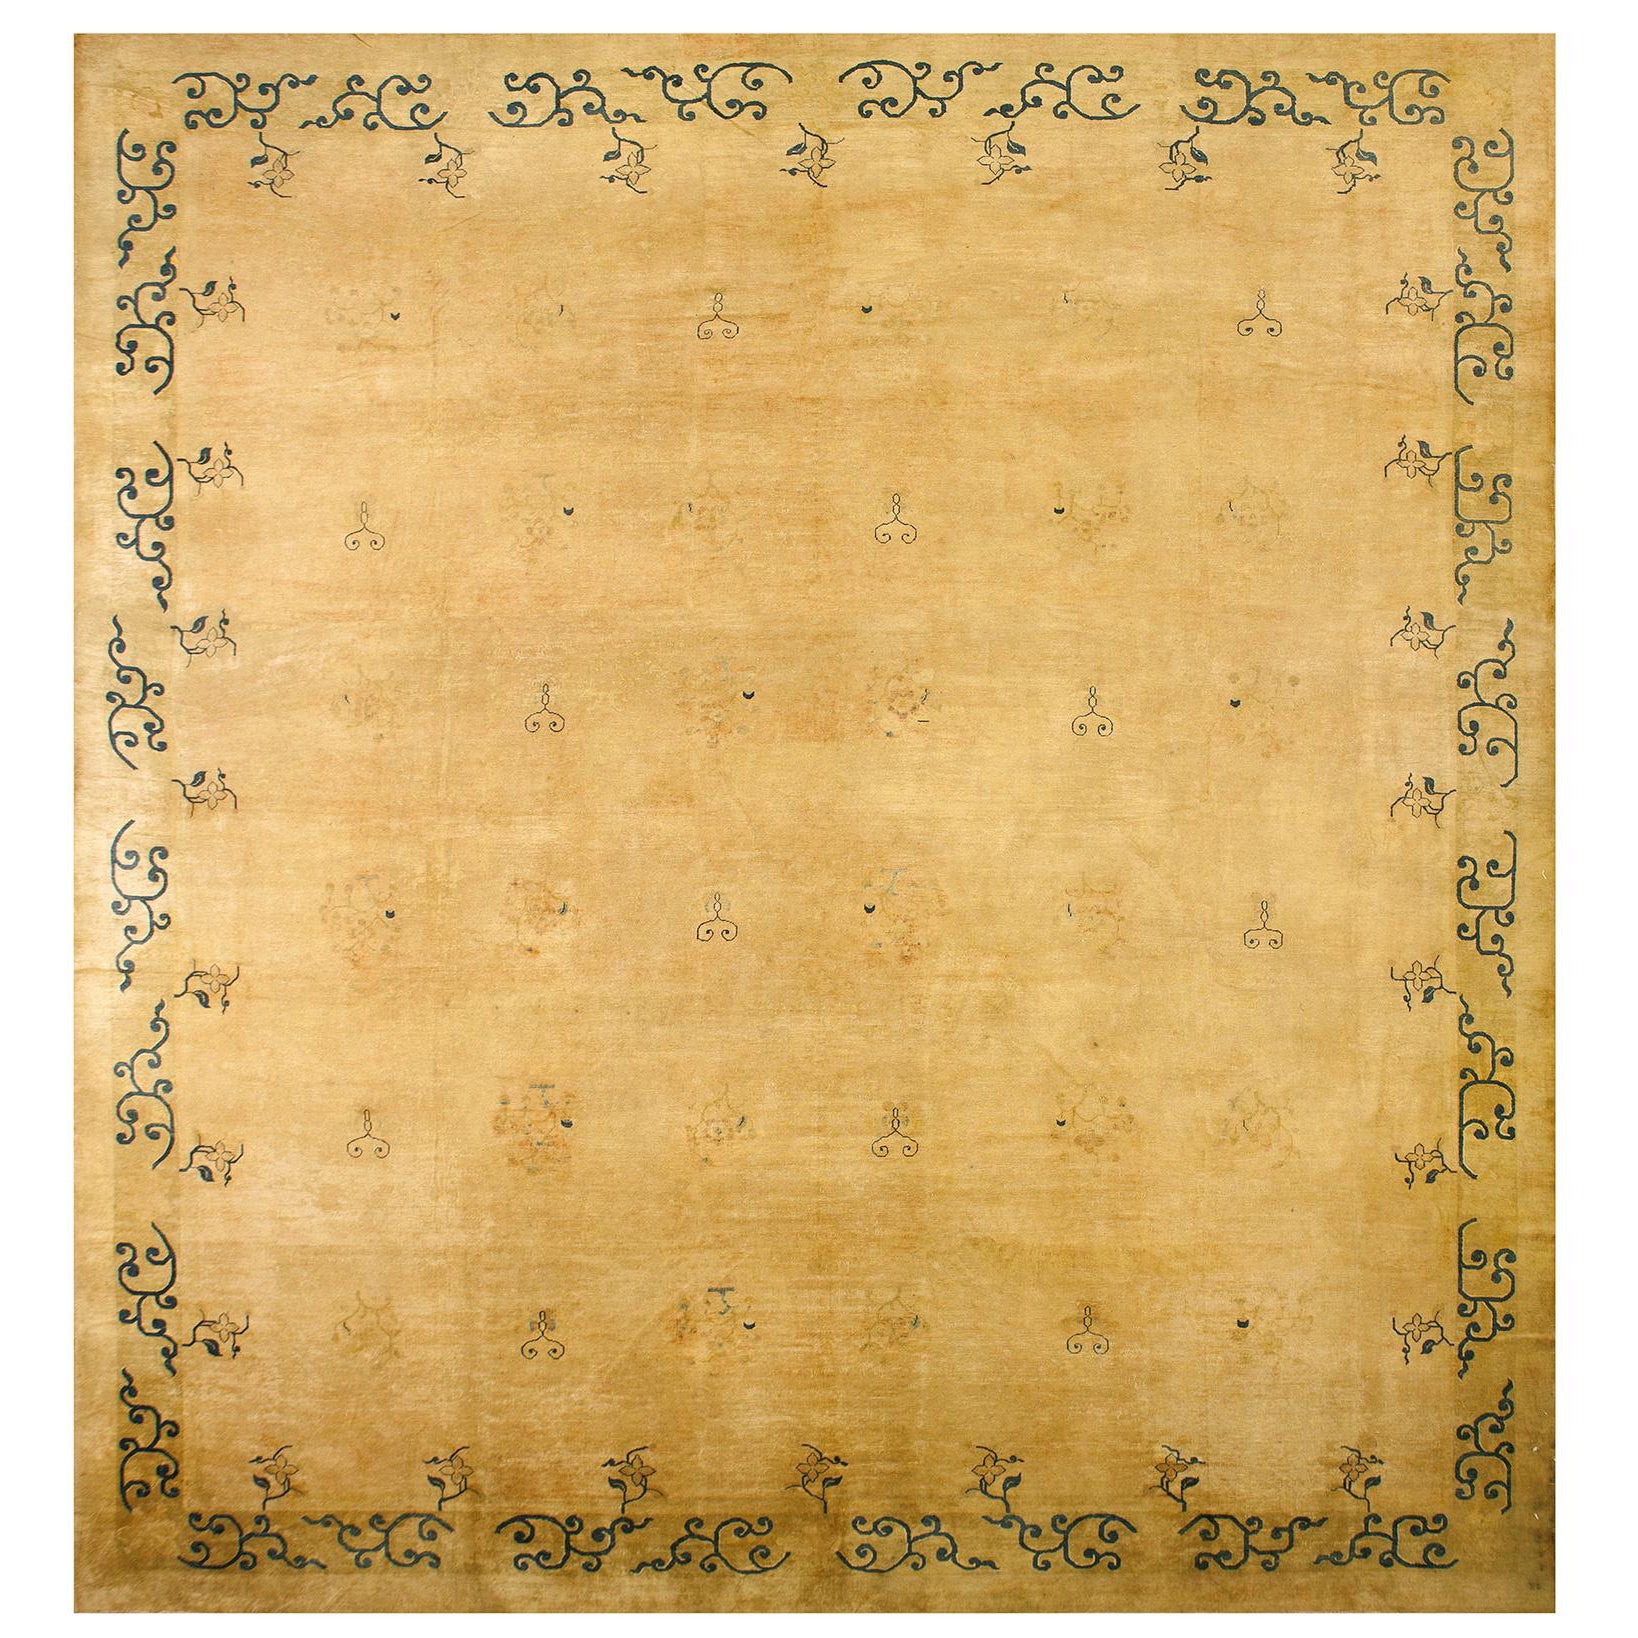 Early 20th Century N. Chinese Mongolian Carpet ( 16'10'' x 17'10'' - 513 x 544 )